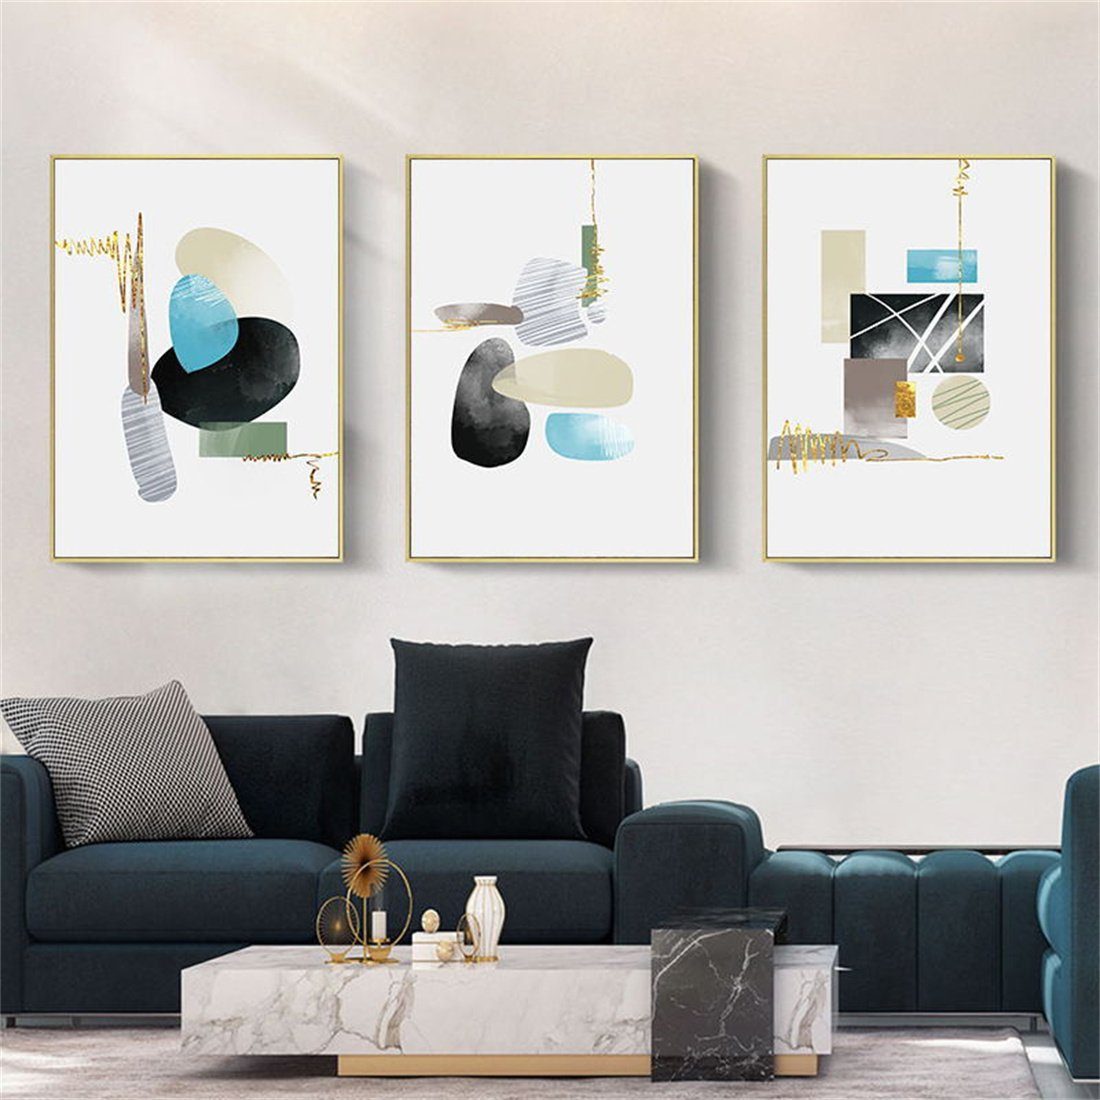 Wandbild HOPPO~ Bildeinsätze,farbenfrohe 3 dekorative Einsätze geometrische ungerahmte